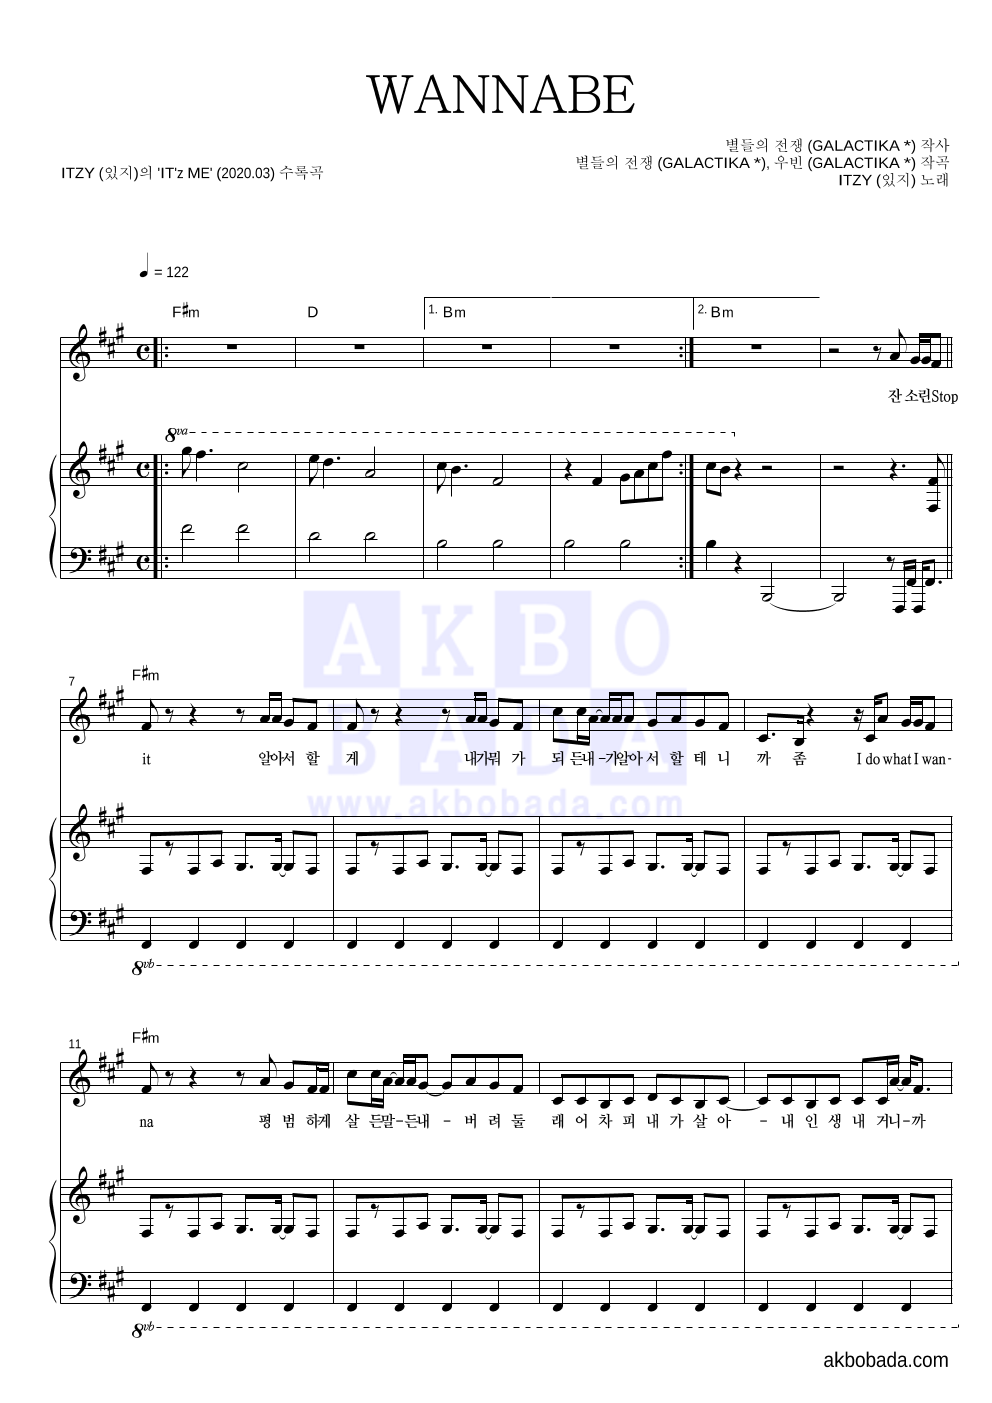 ITZY(있지) - WANNABE 피아노 3단 악보 